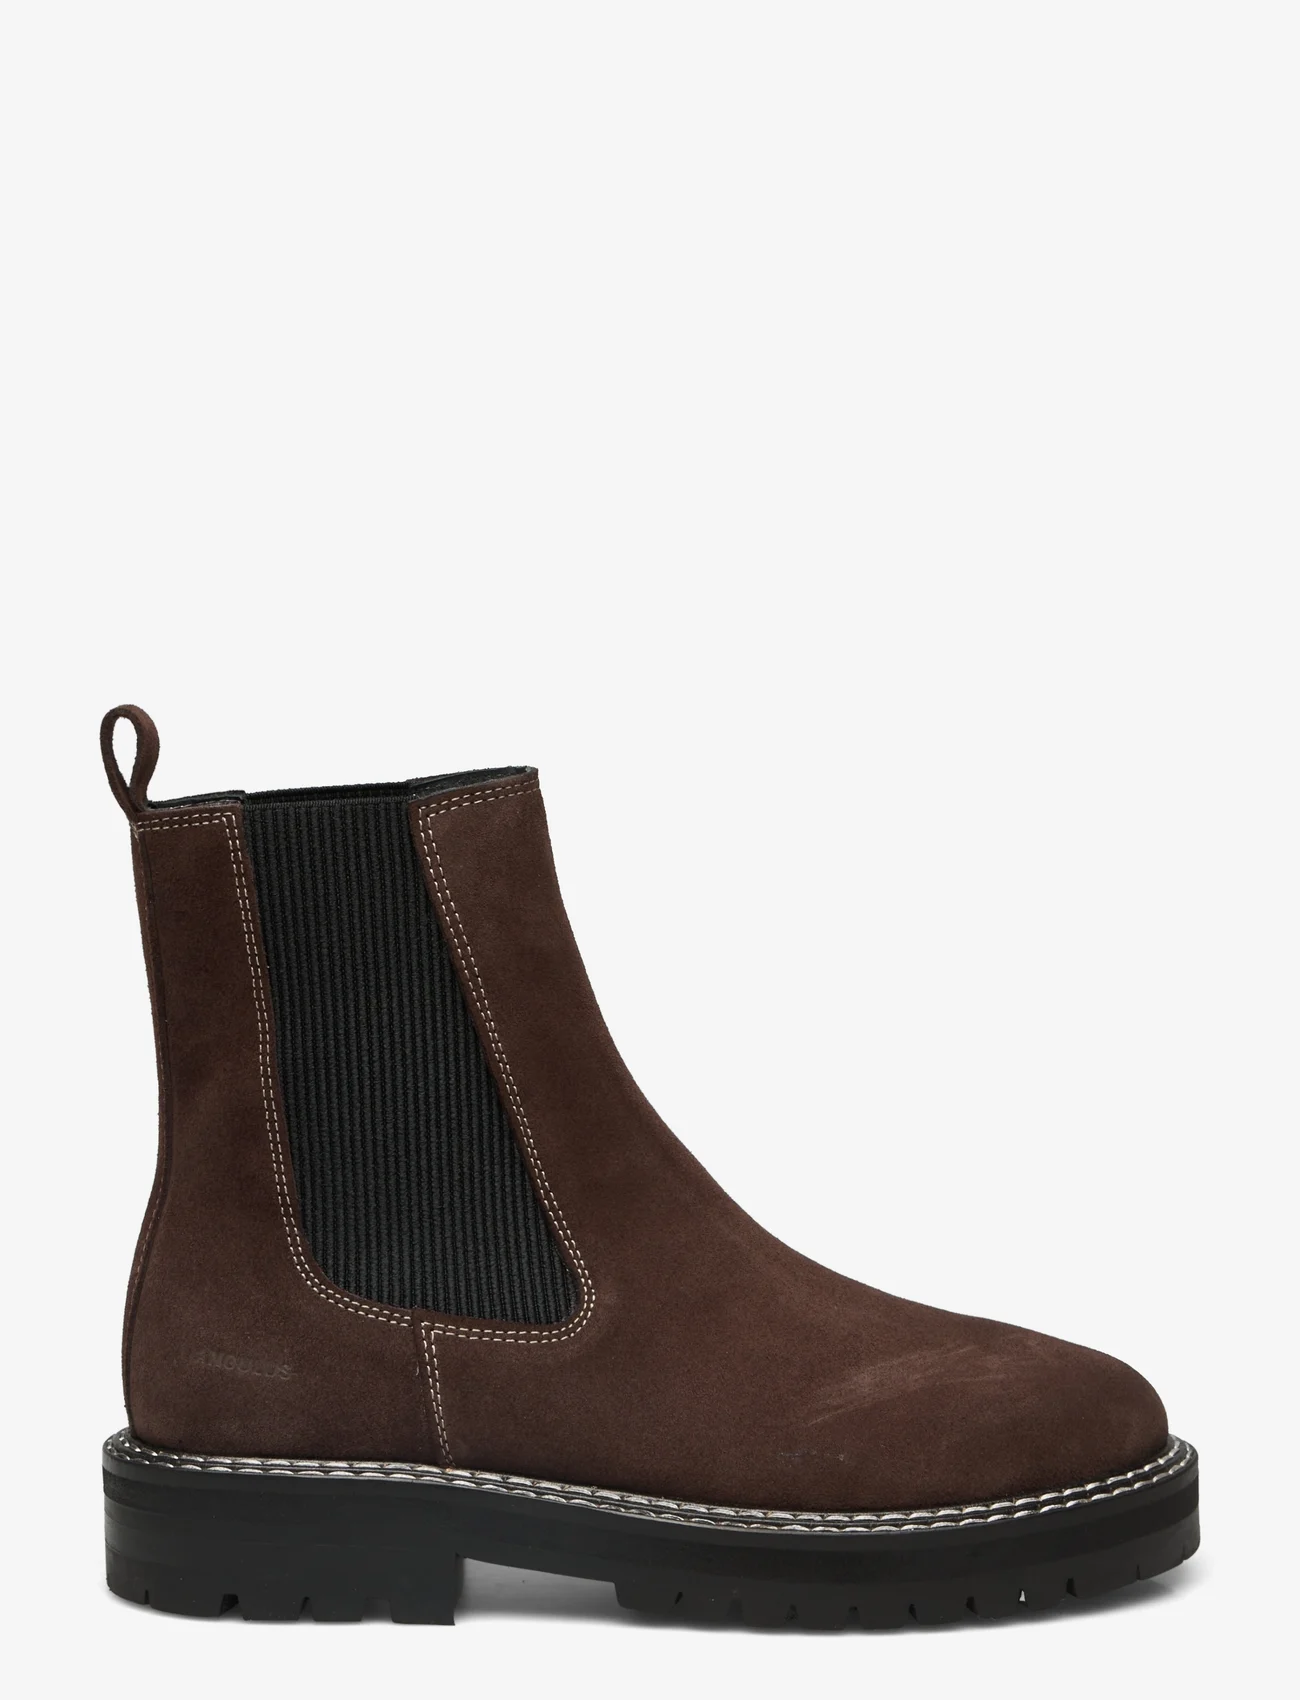 ANGULUS - Boots - flat - chelsea-saapad - 1718/019 brown/black - 1